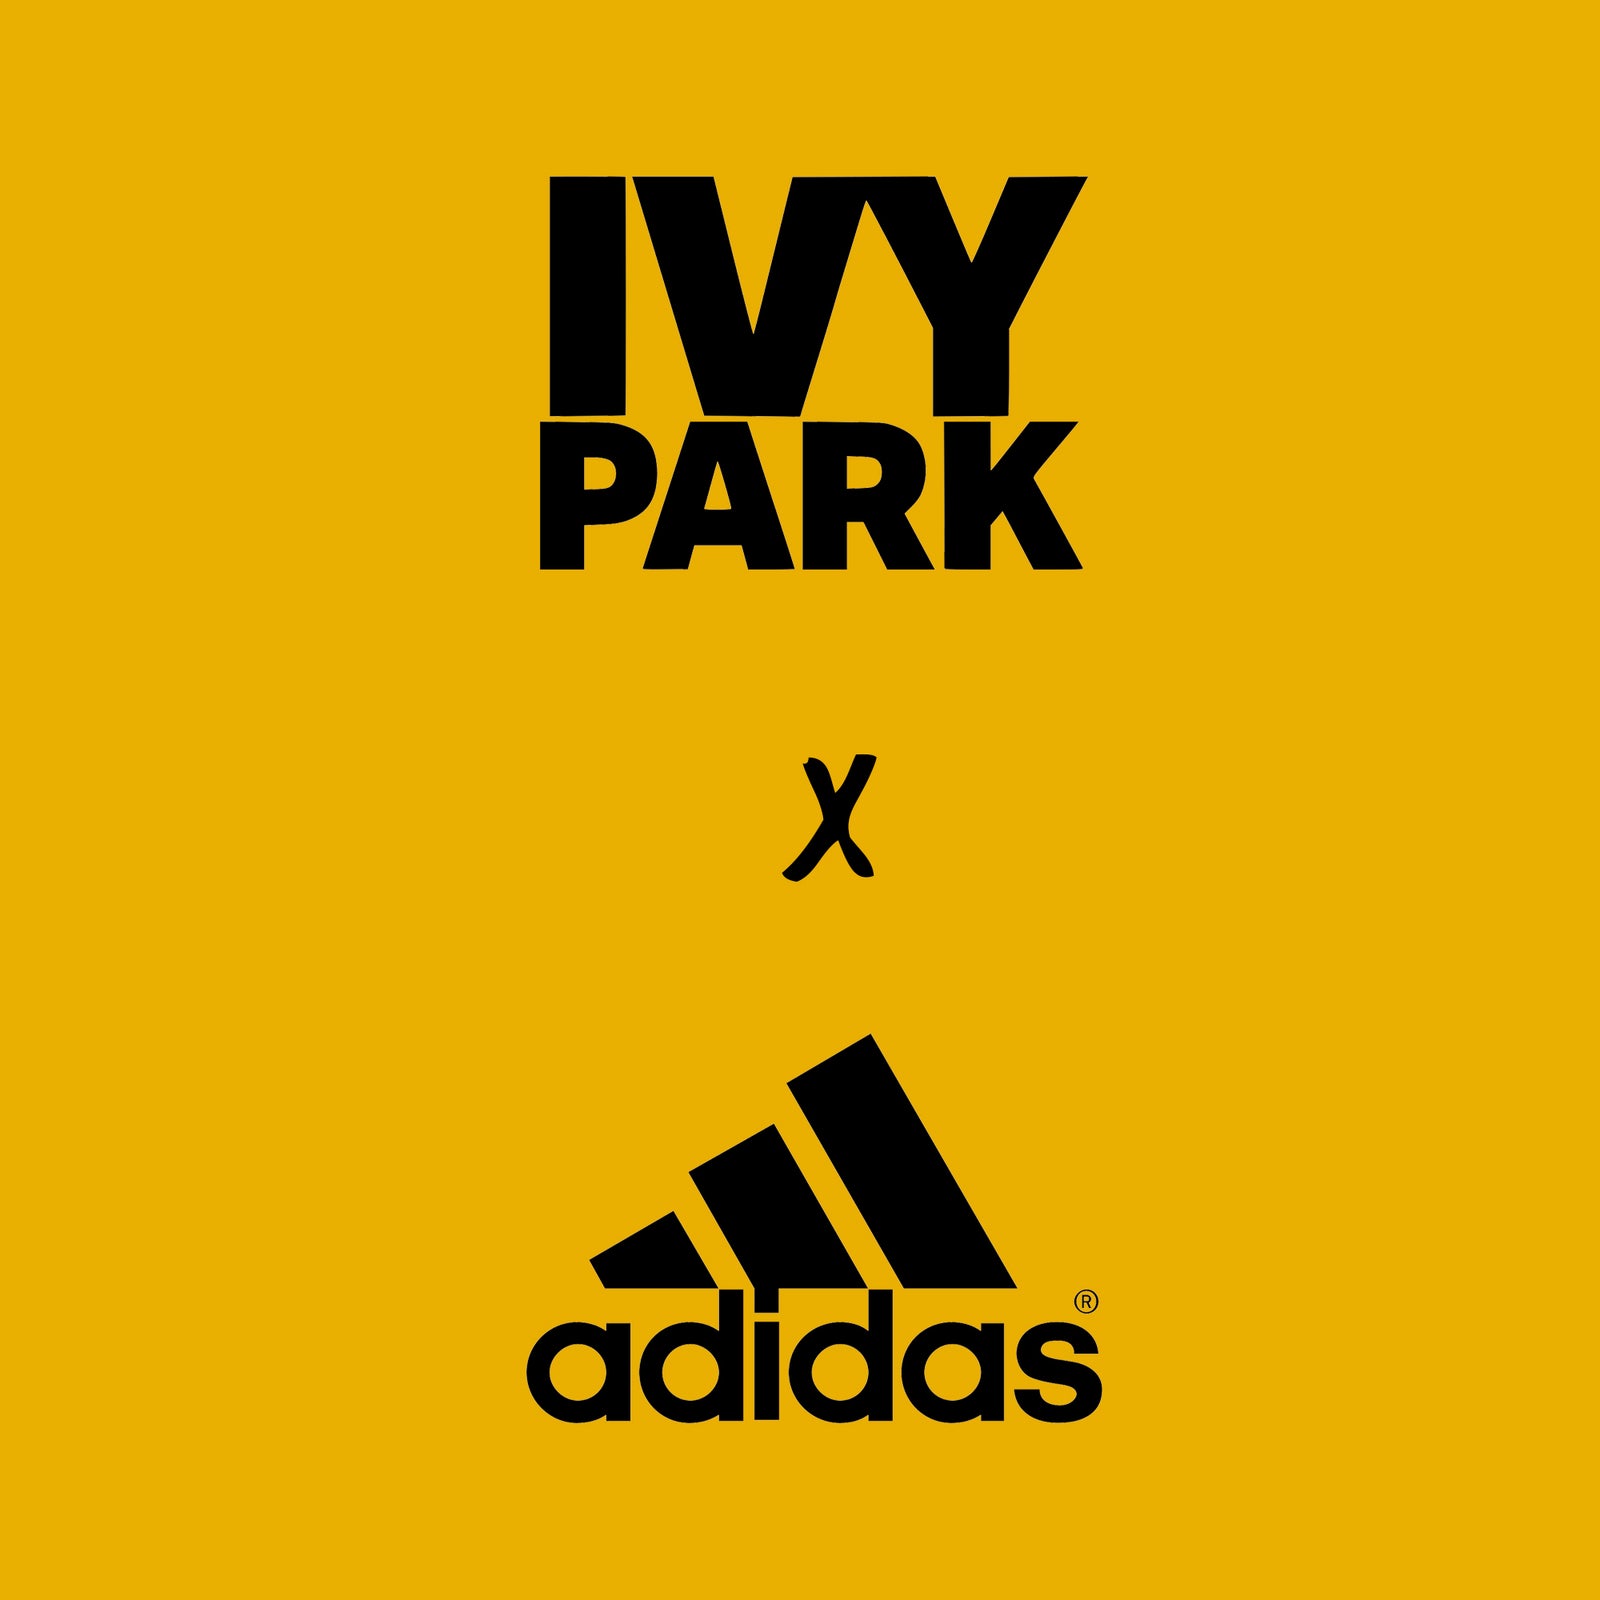 adidas ivy park logo